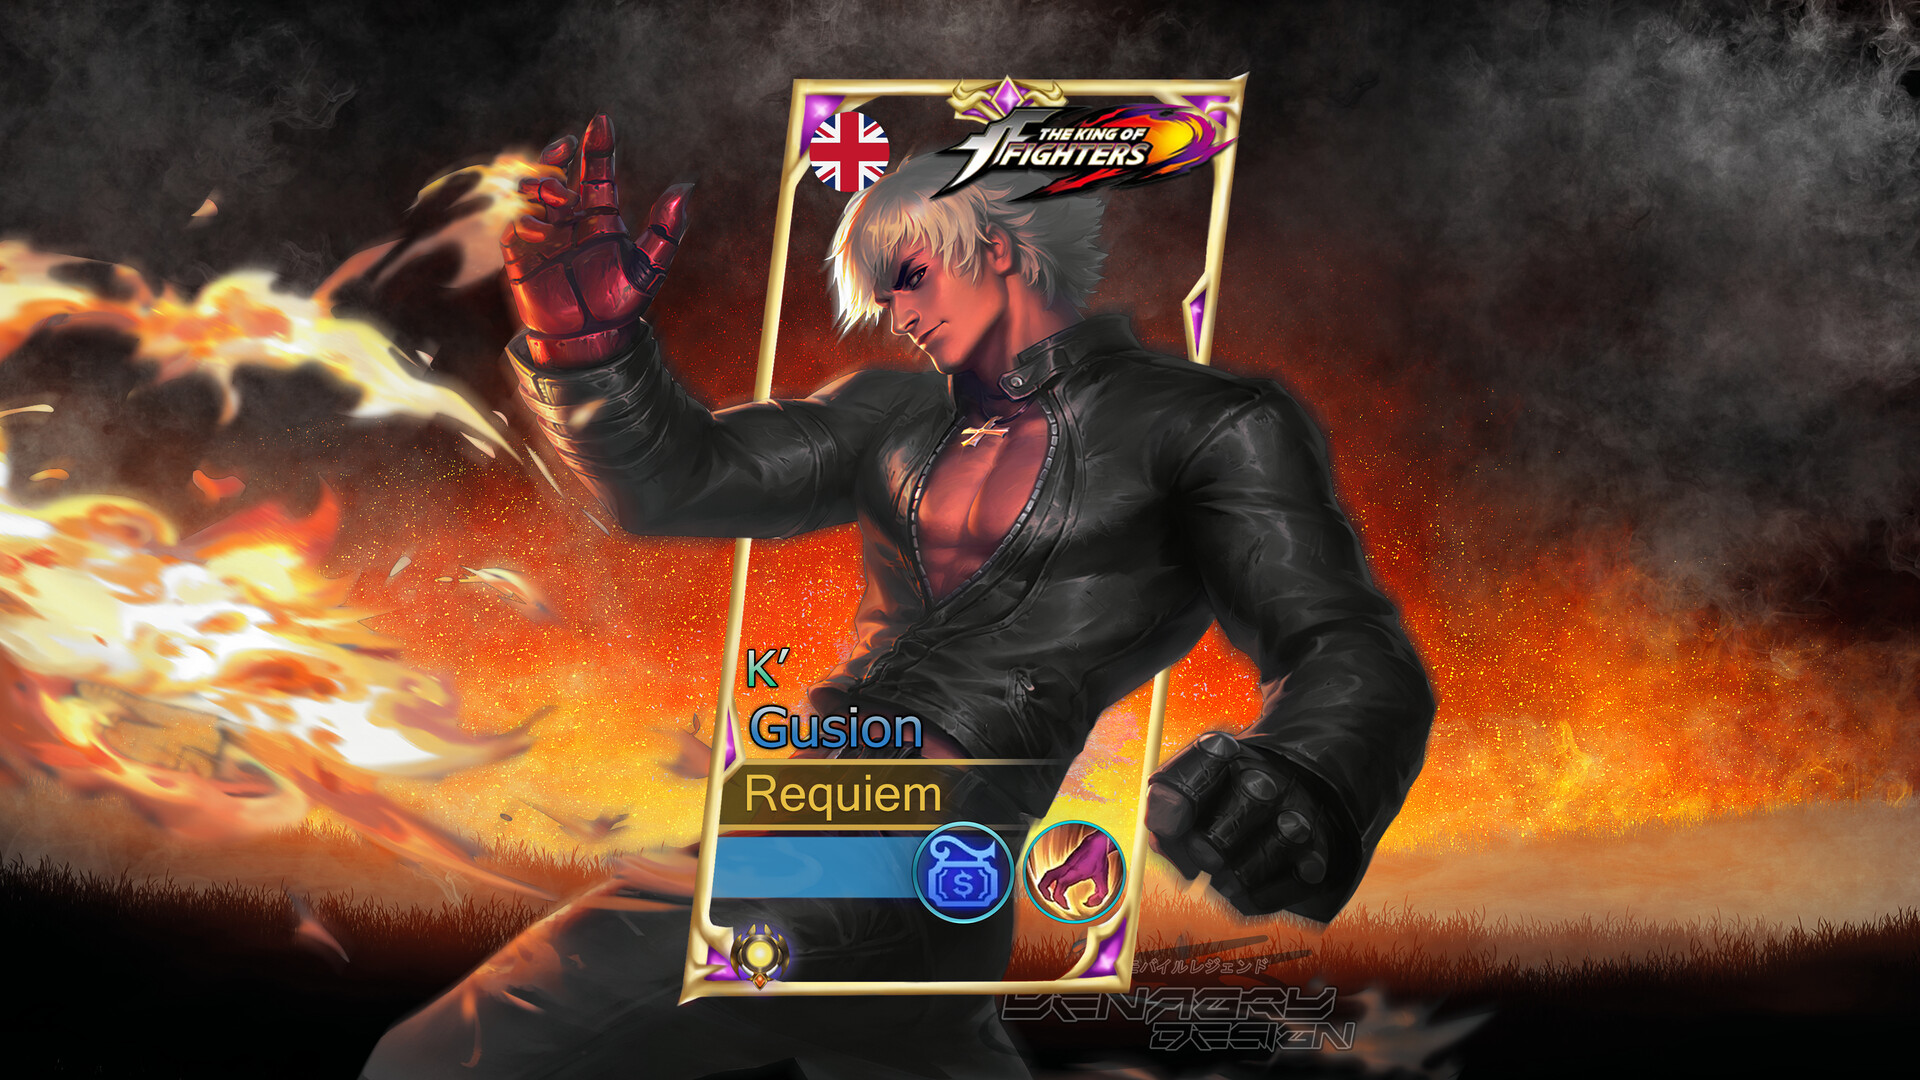 ArtStation - Players frame on Mobile Legends: bang bang, hero Gusion K'